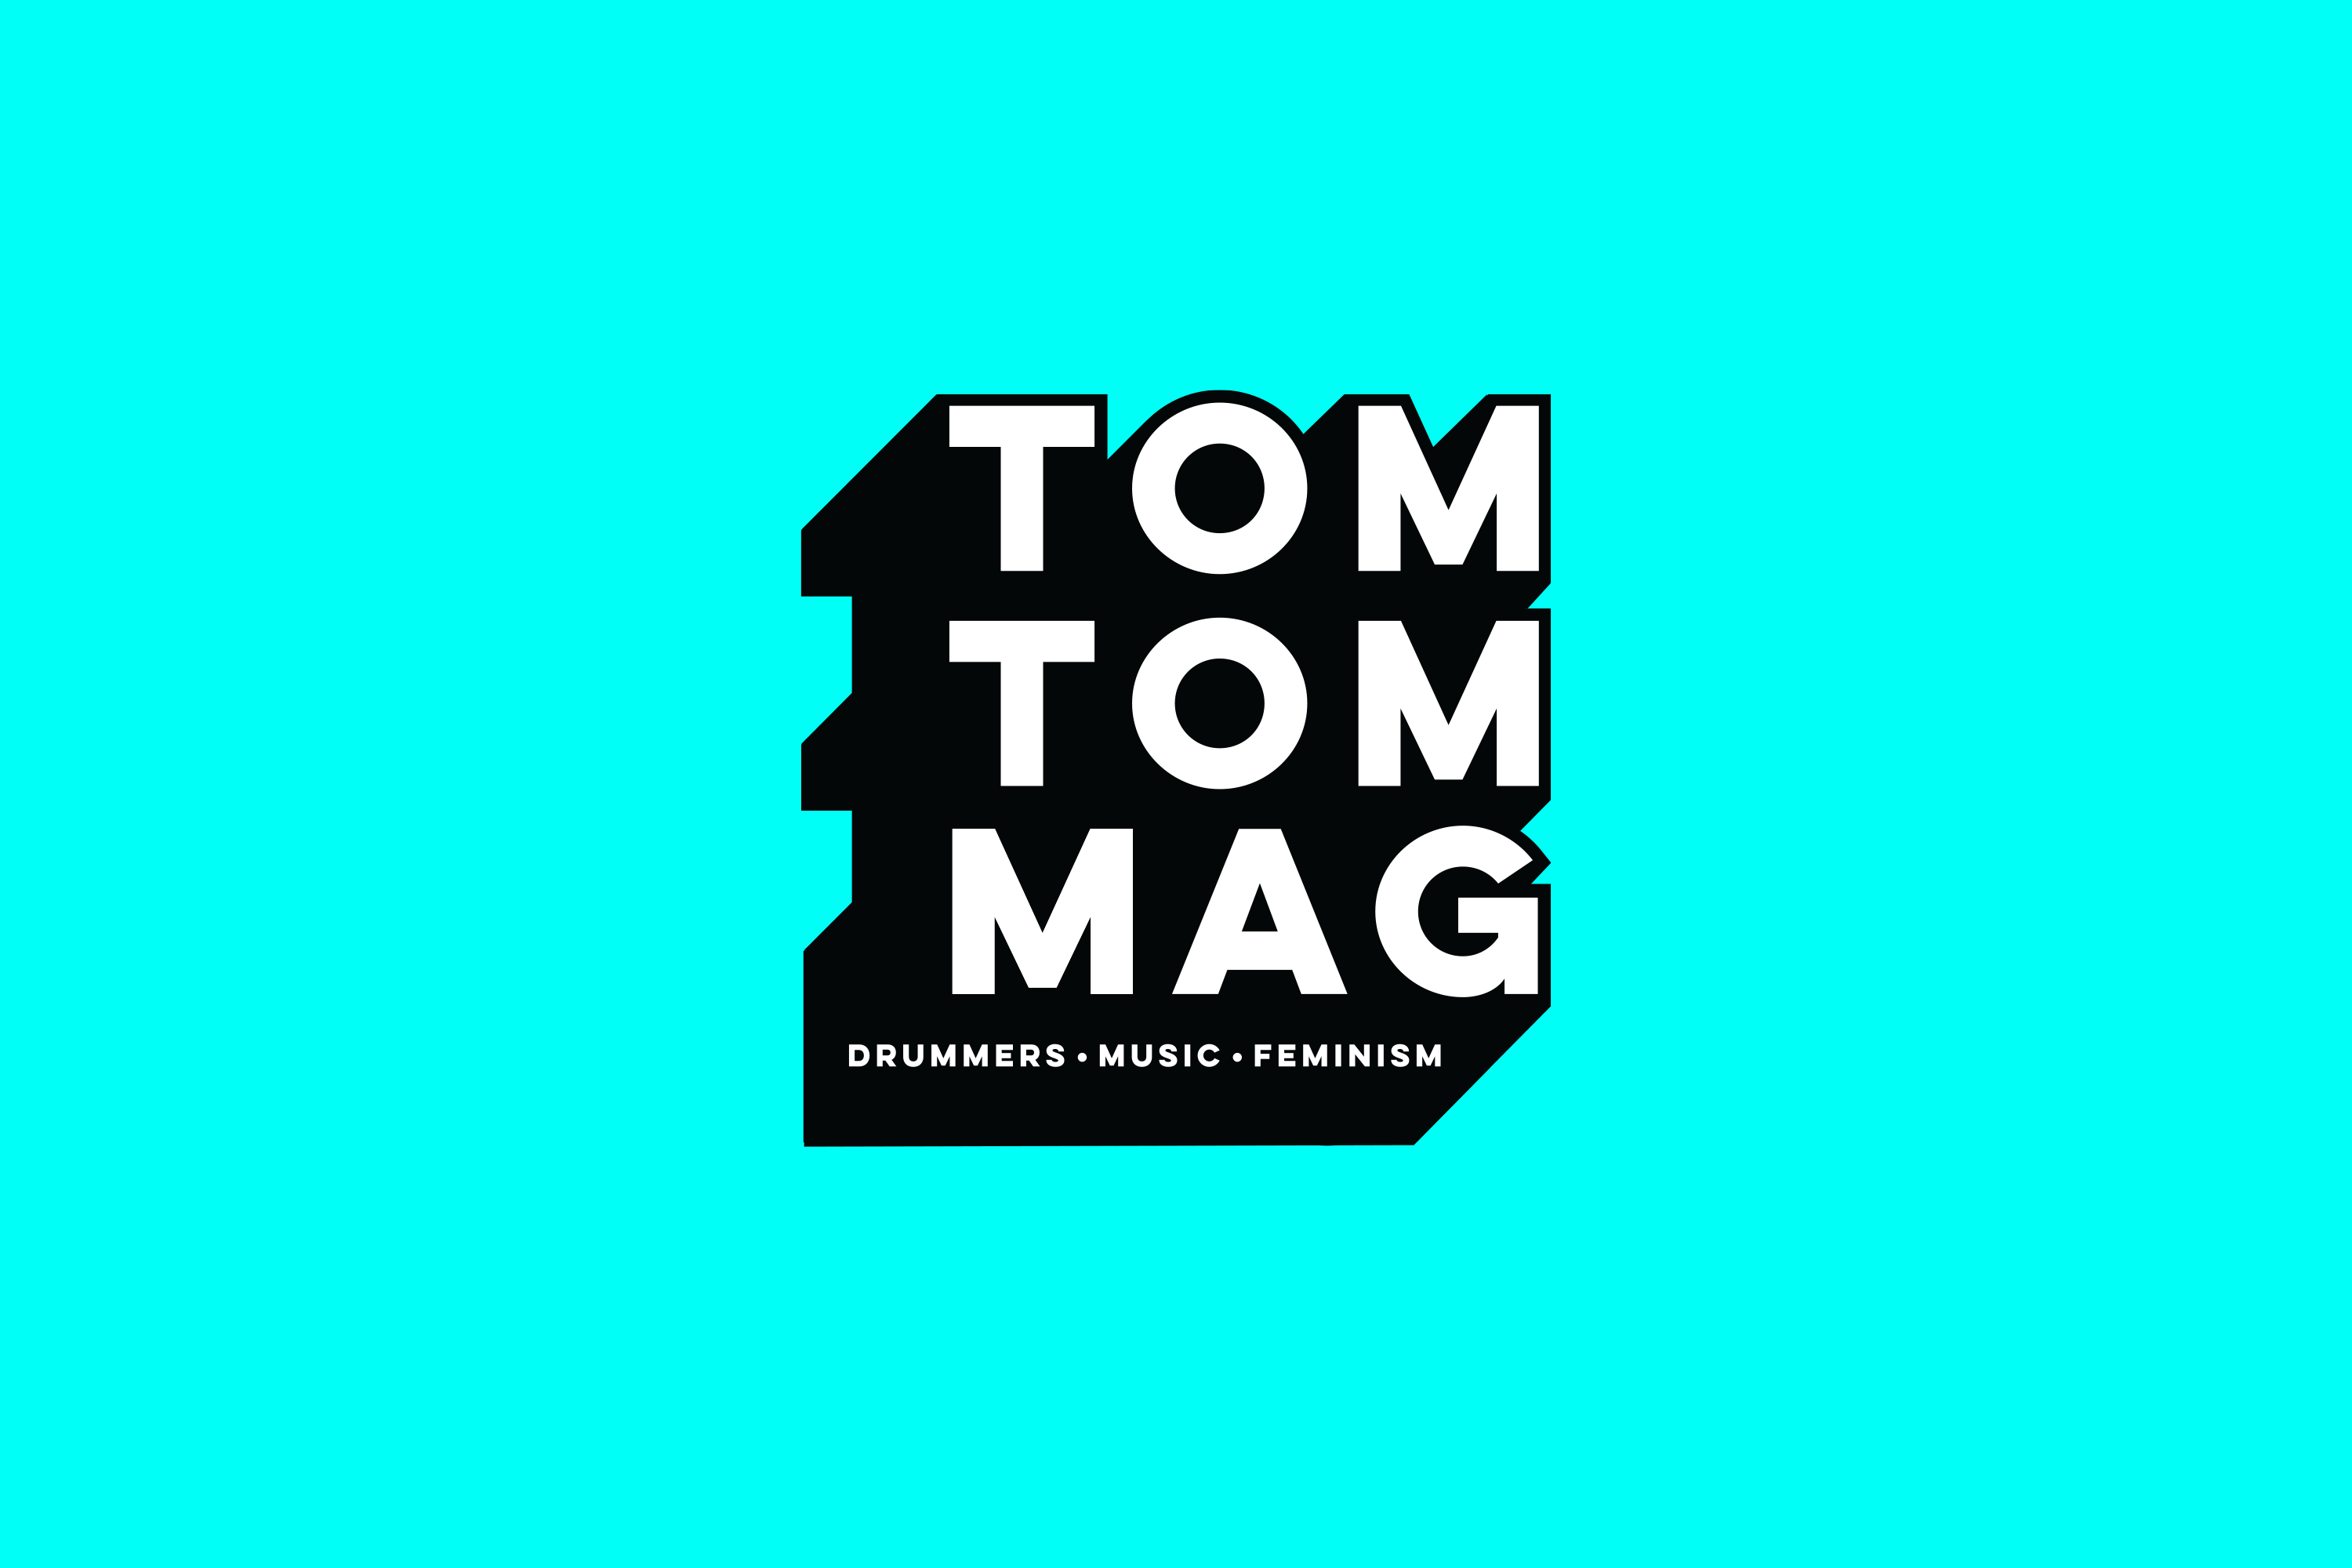 TomTom-Logos-02